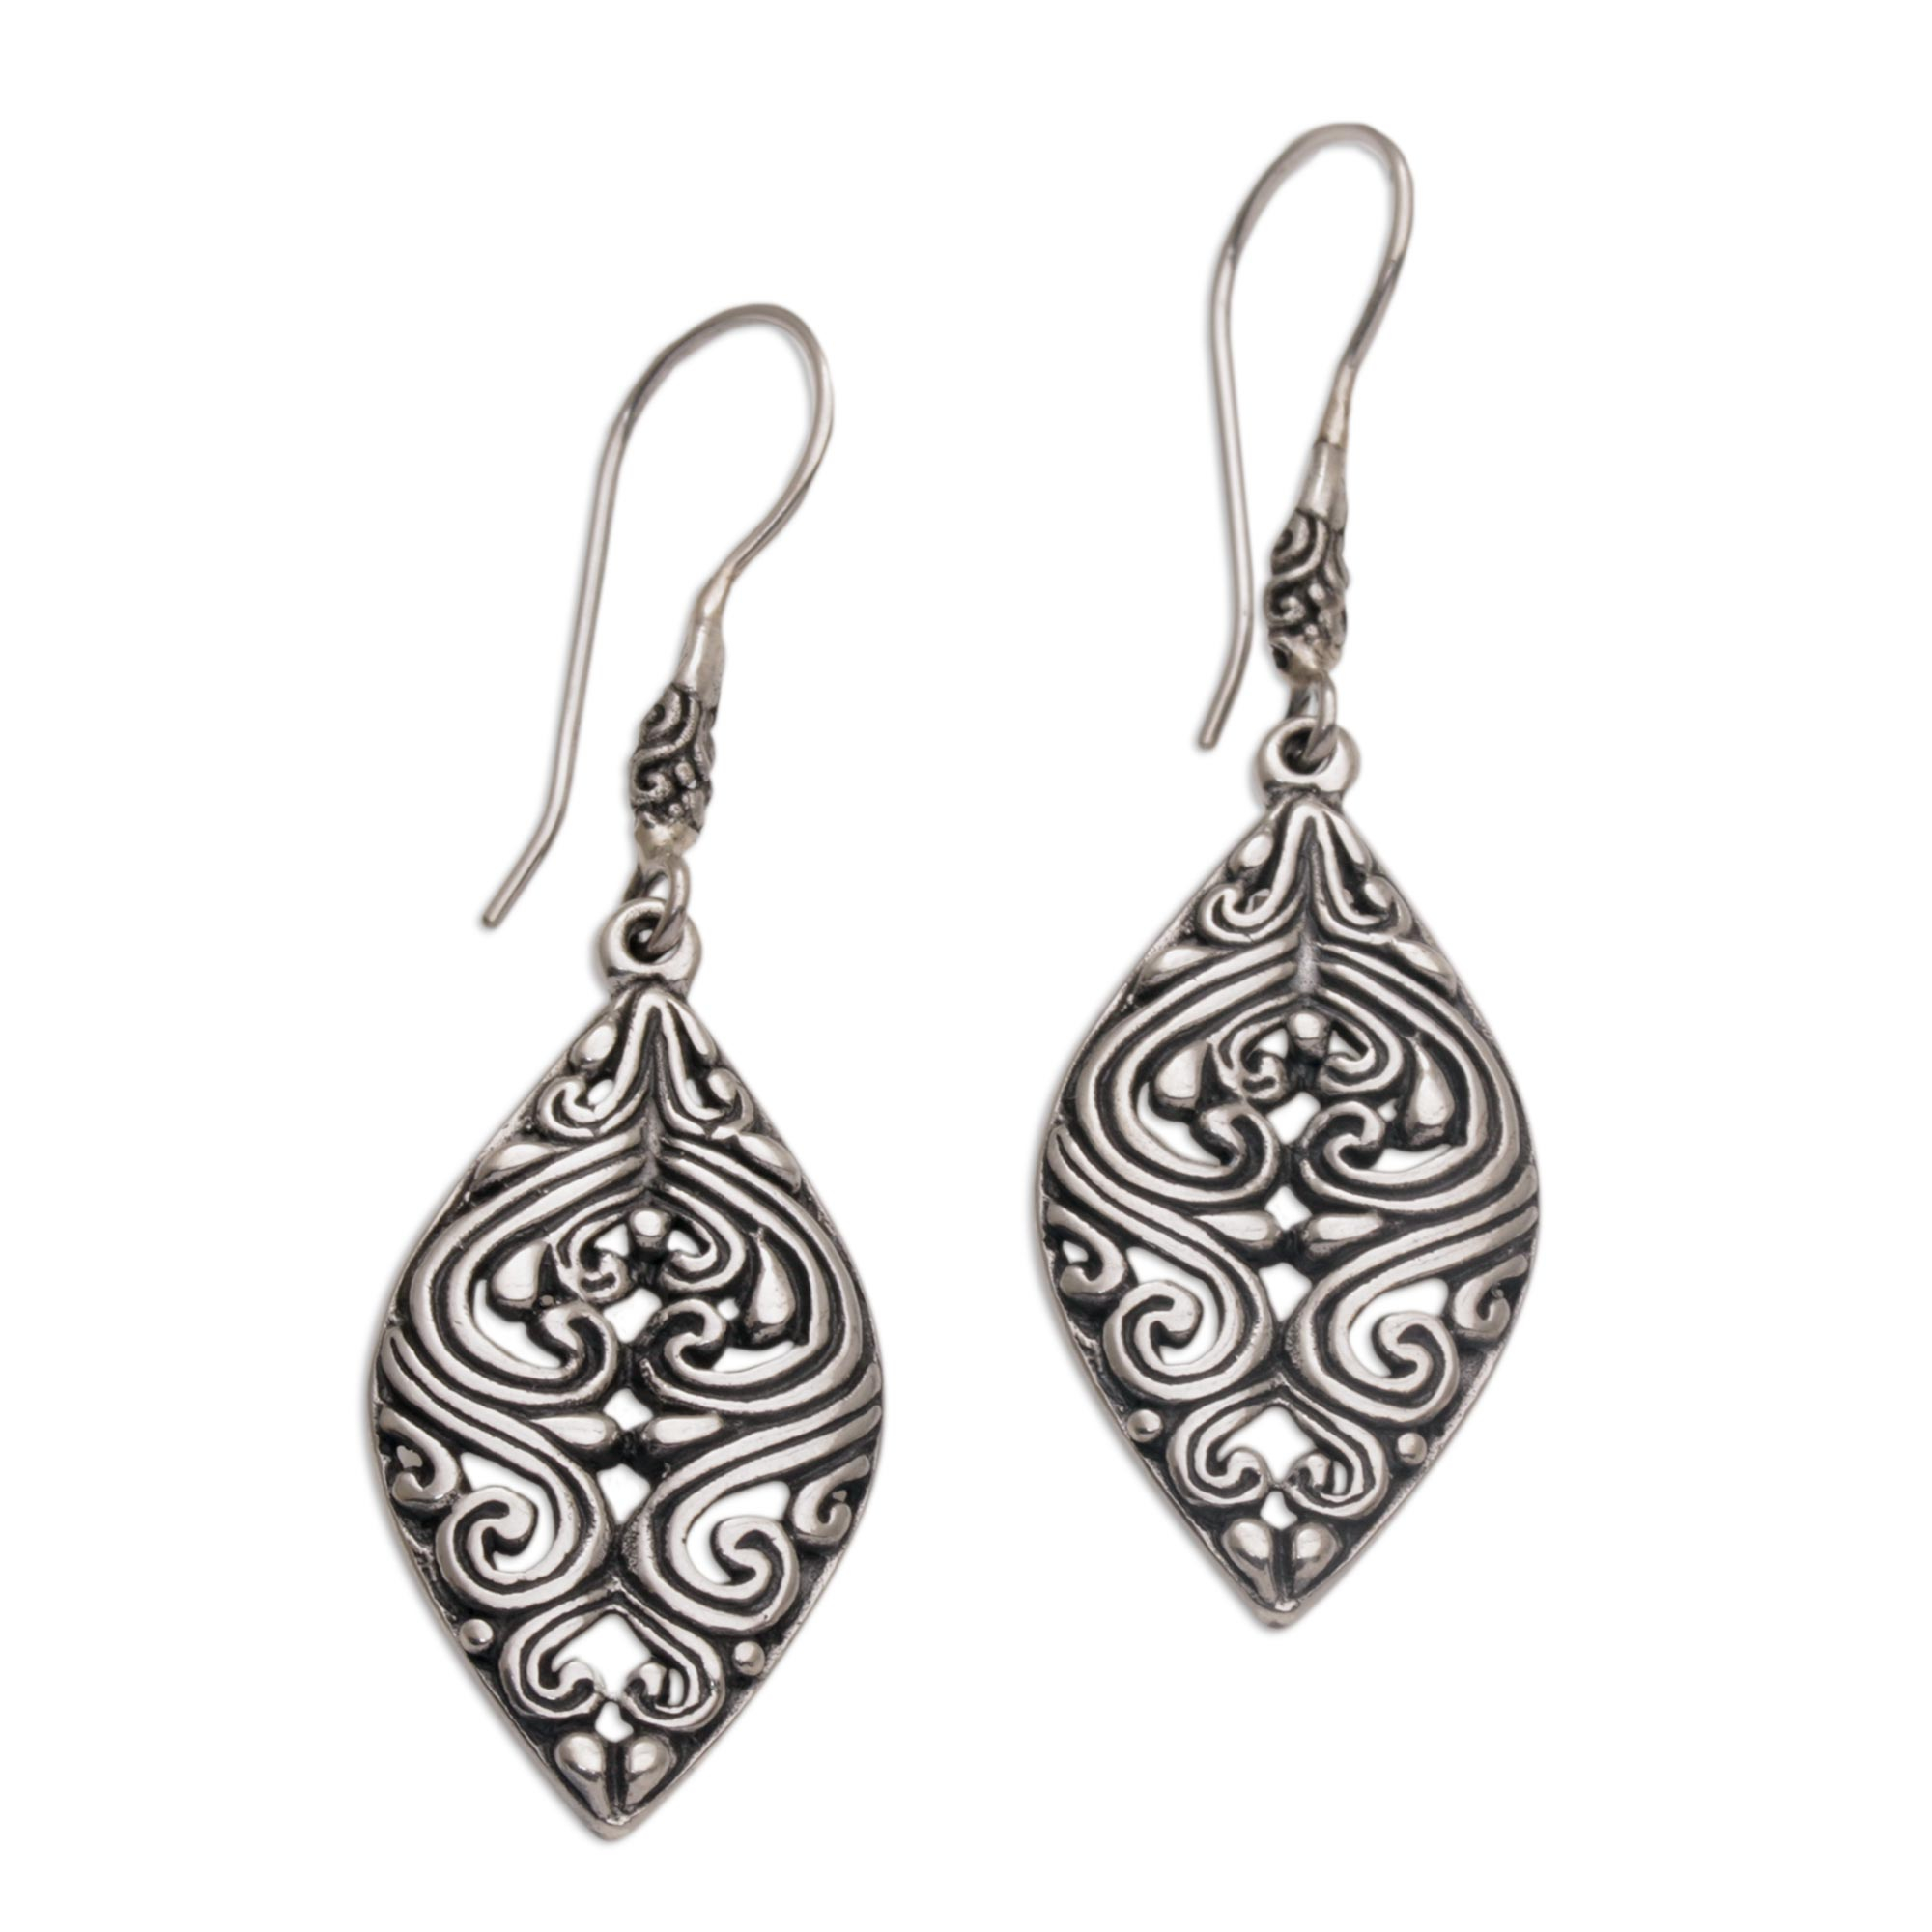 Fair Trade Sterling Silver Dangle Earrings from Bali - Leaf of Love ...